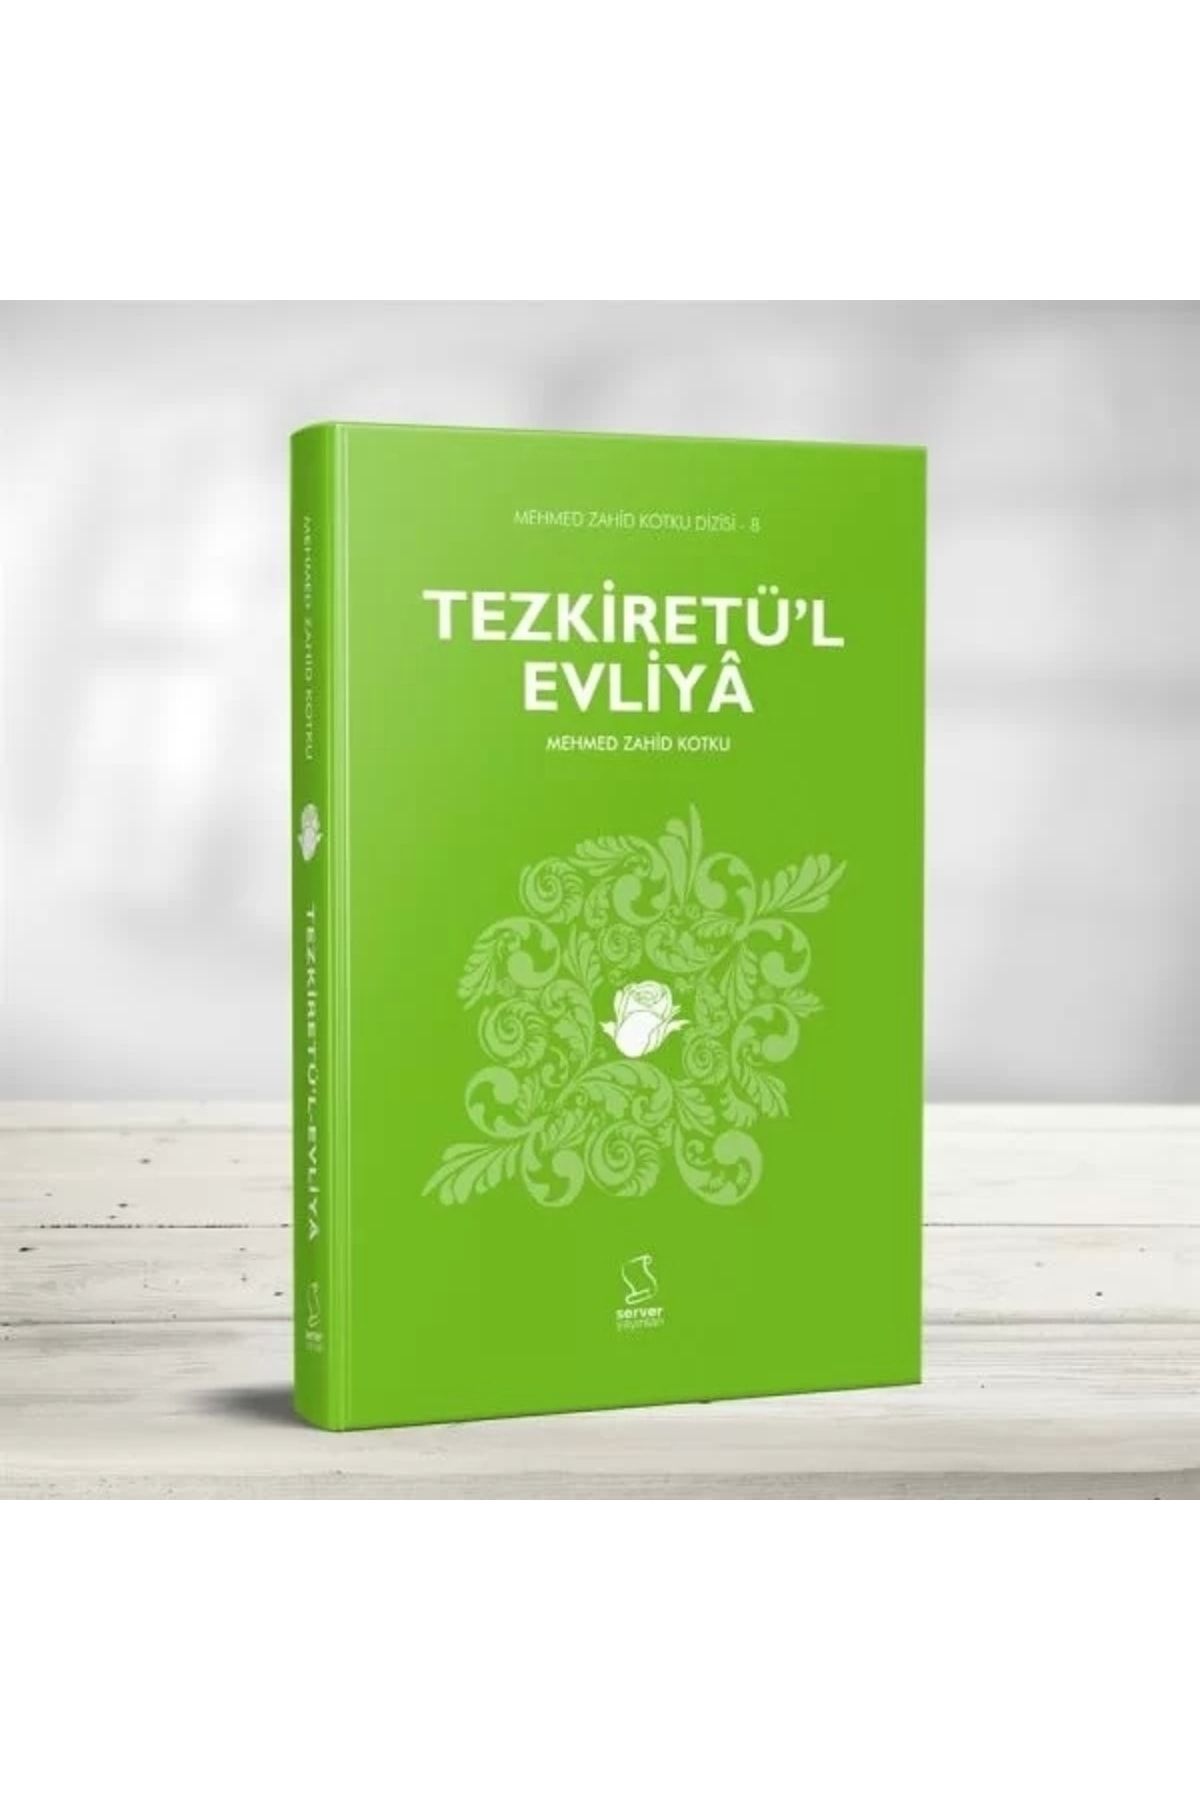 Server Yayınları Tezkiretü'l Evliya / M. Zahid Kotku